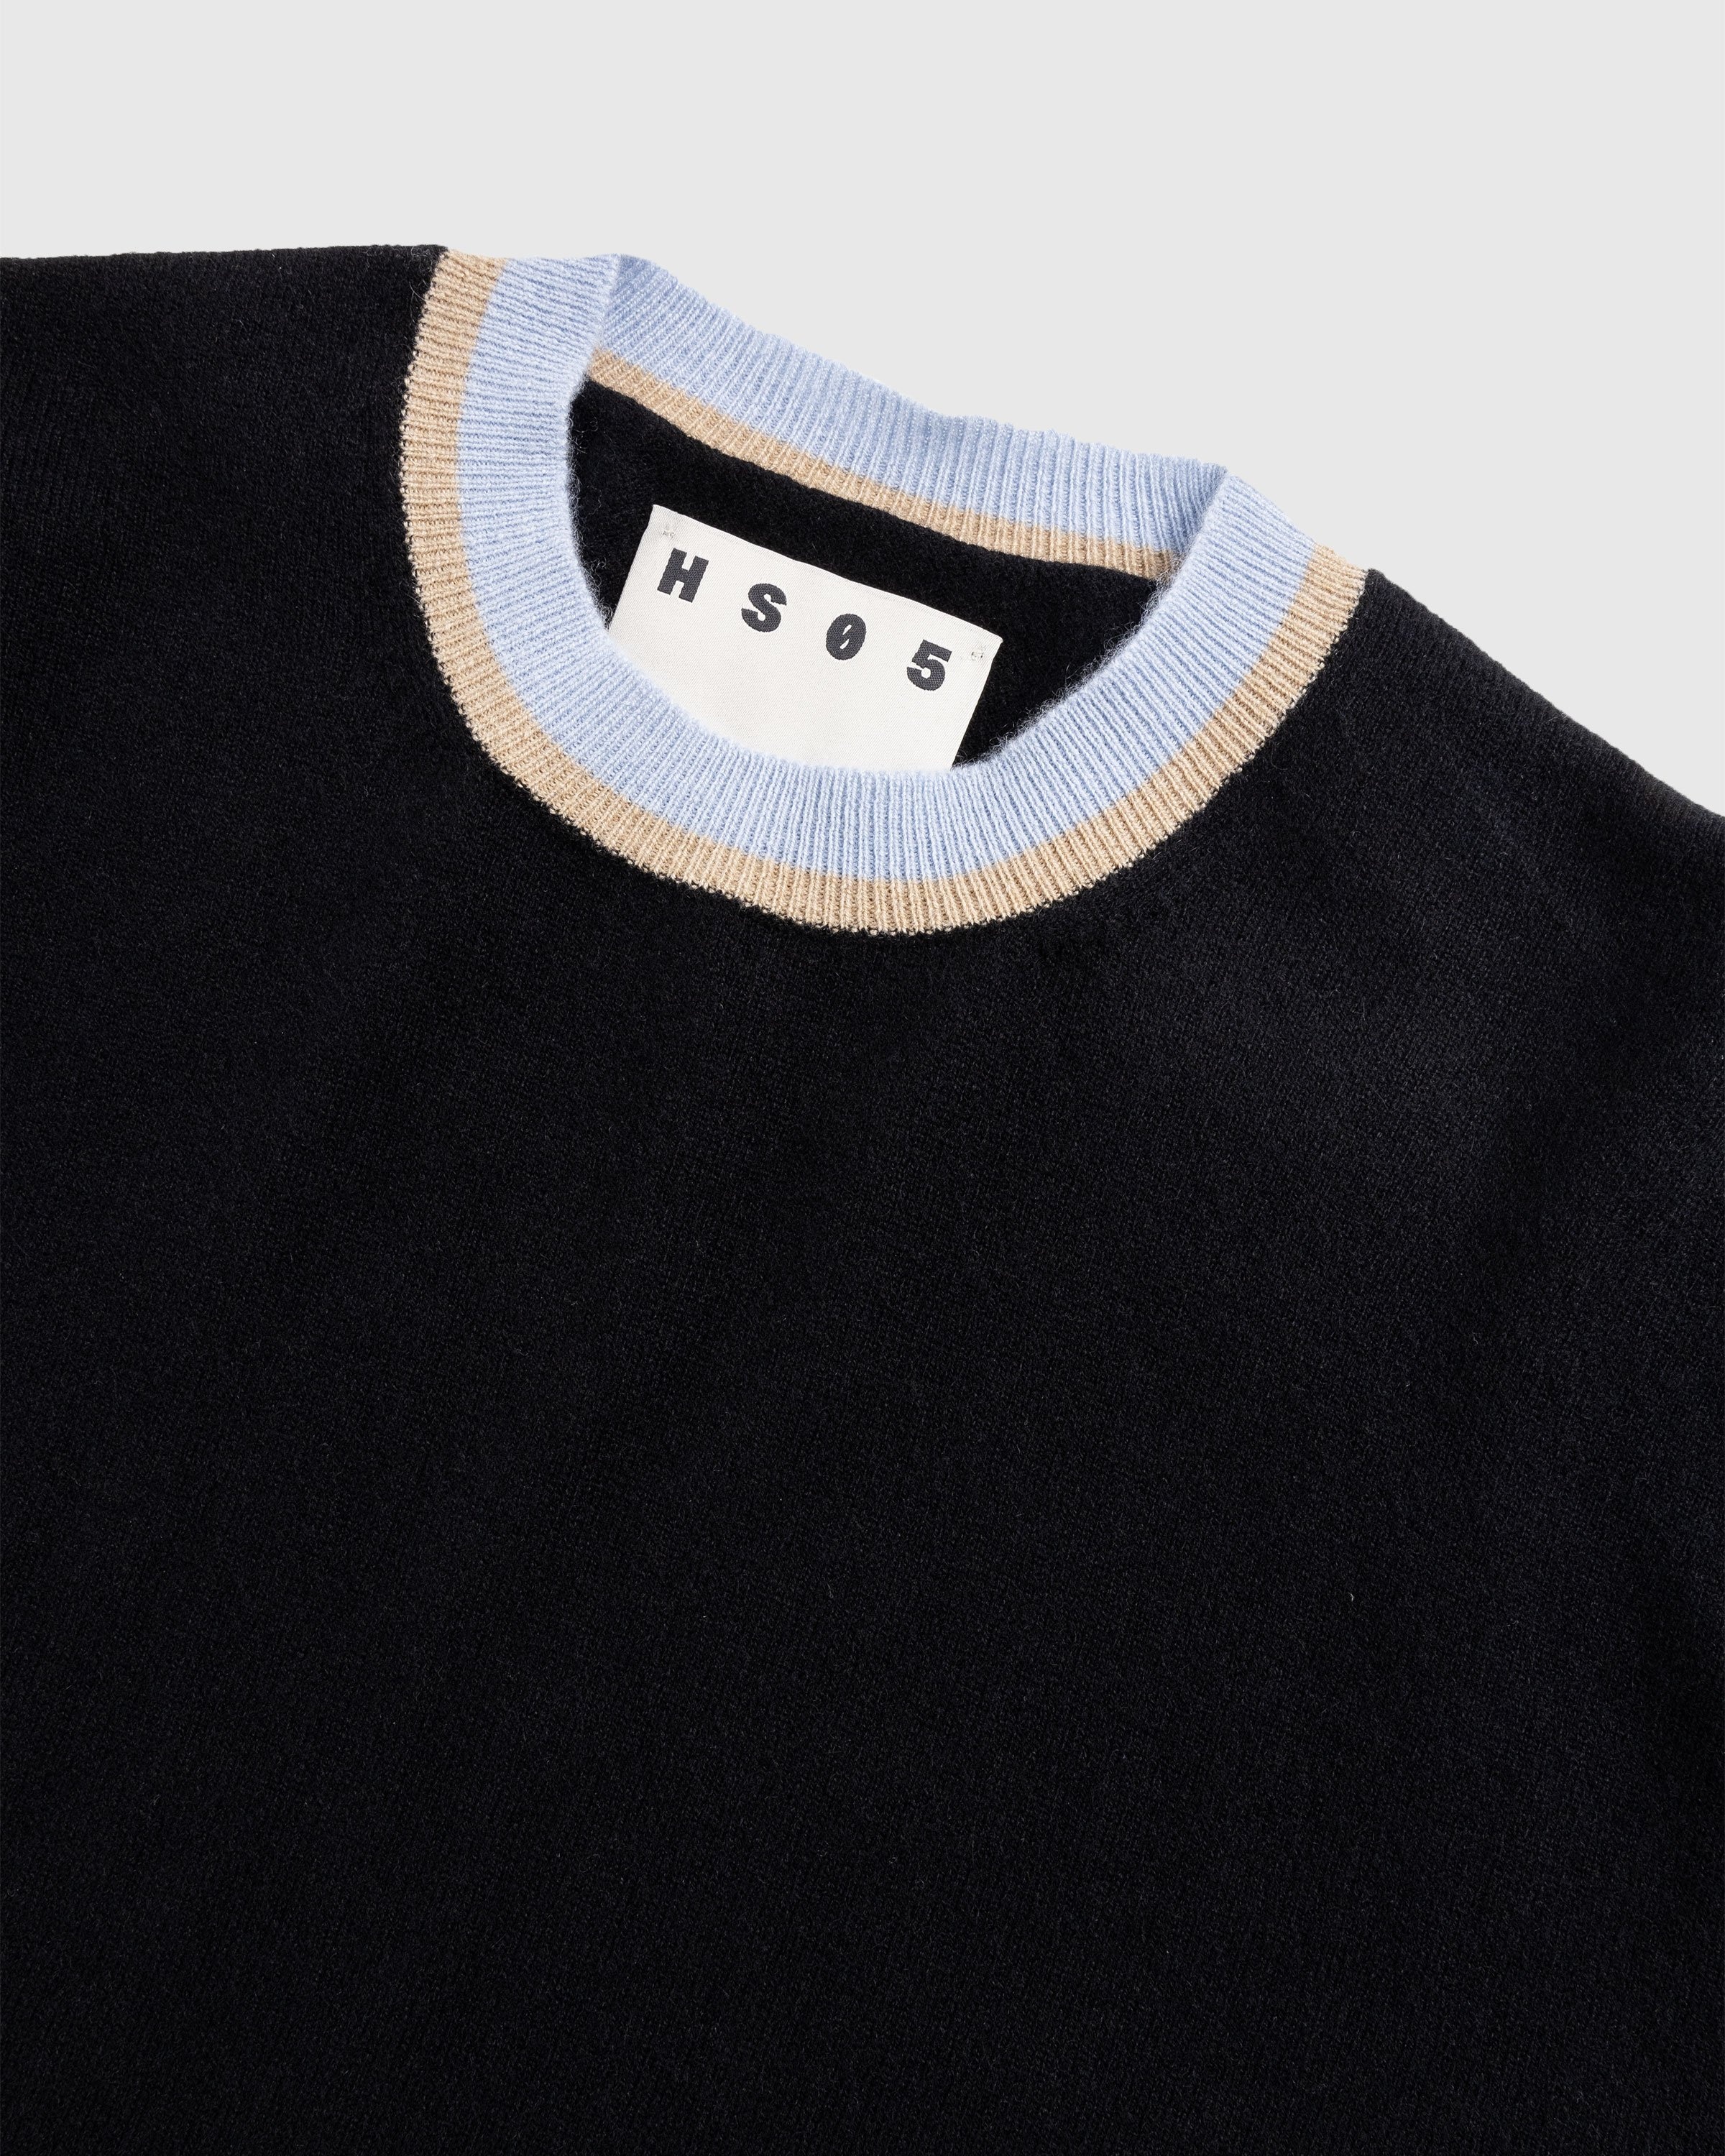 Highsnobiety HS05 – Cashmere Crew Sweater Black - Knitwear - Black - Image 6